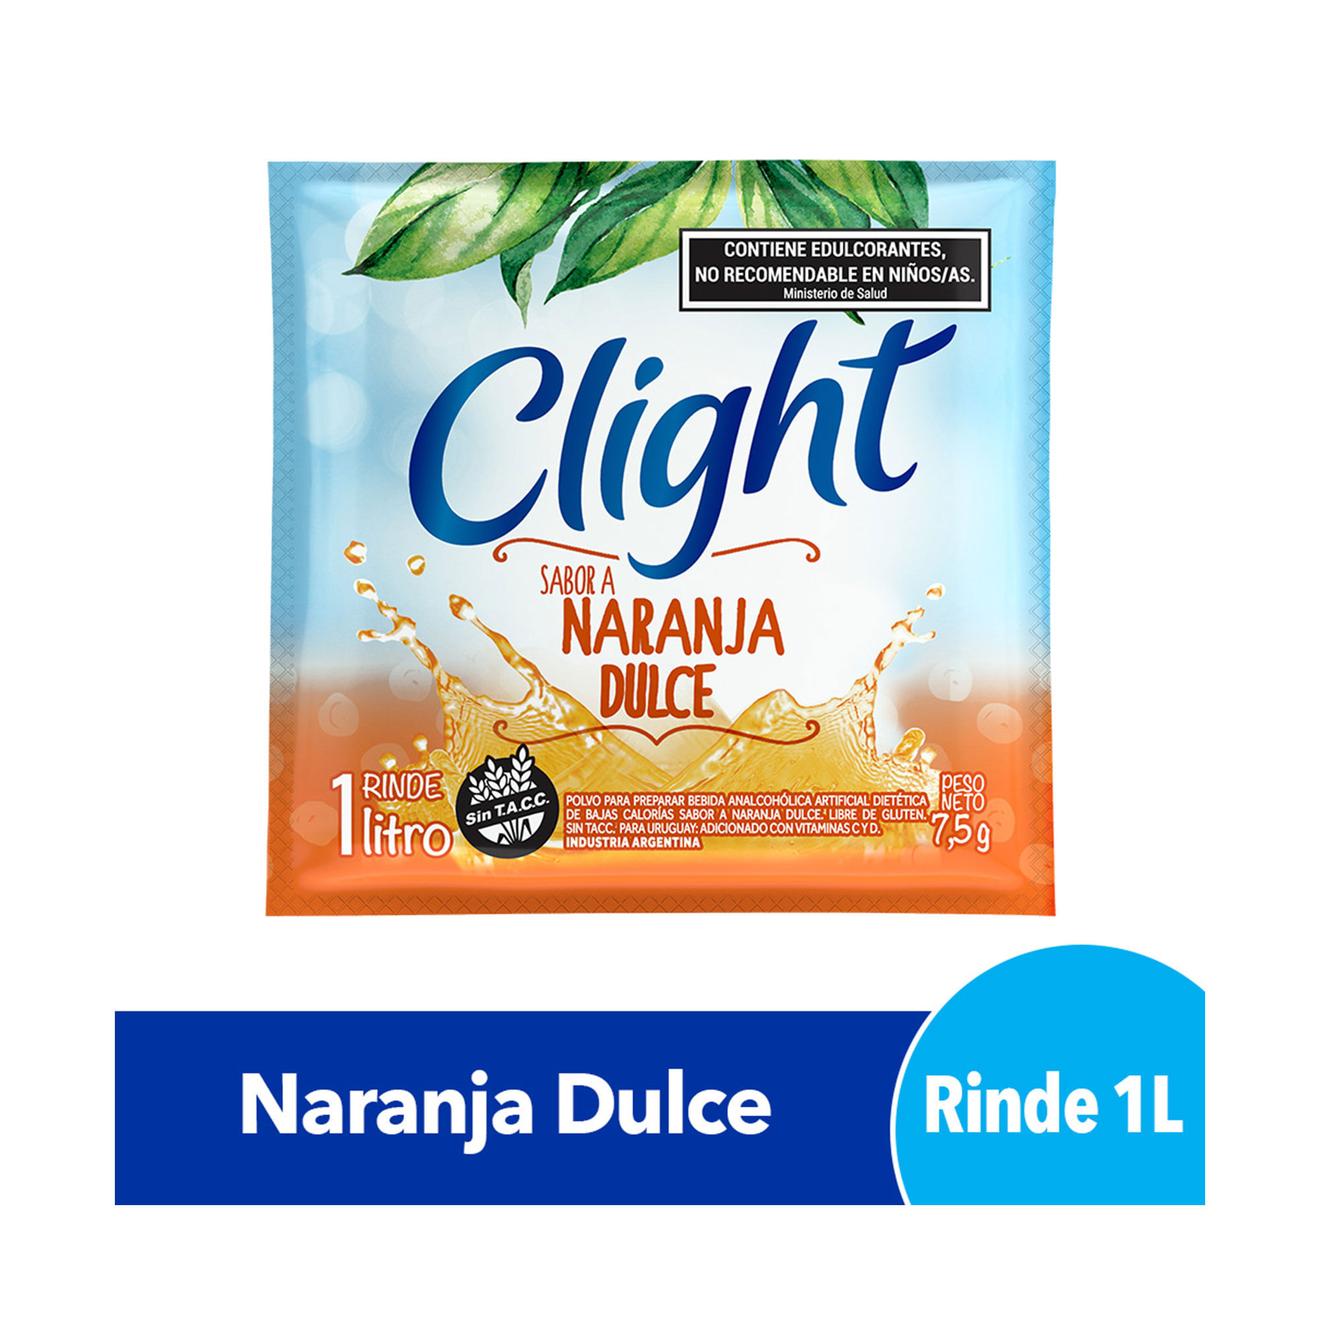 Oferta de Jugo en polvo Clight naranja dulce 7.5 g. por $297 en Carrefour